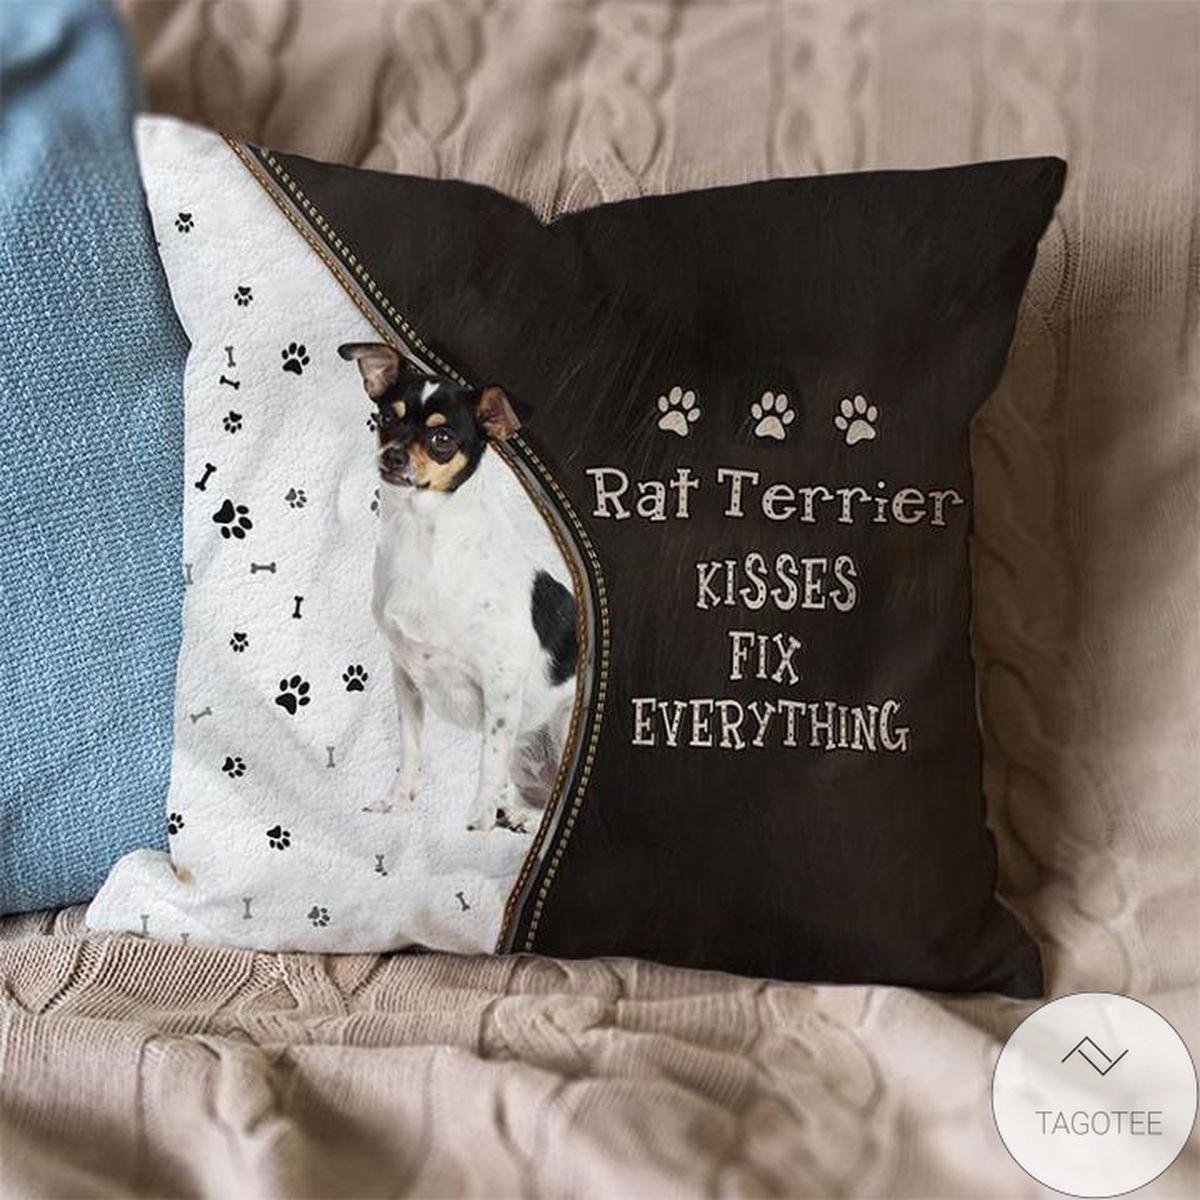 Rat Terrier Kisses Fix Everything Pillowcase